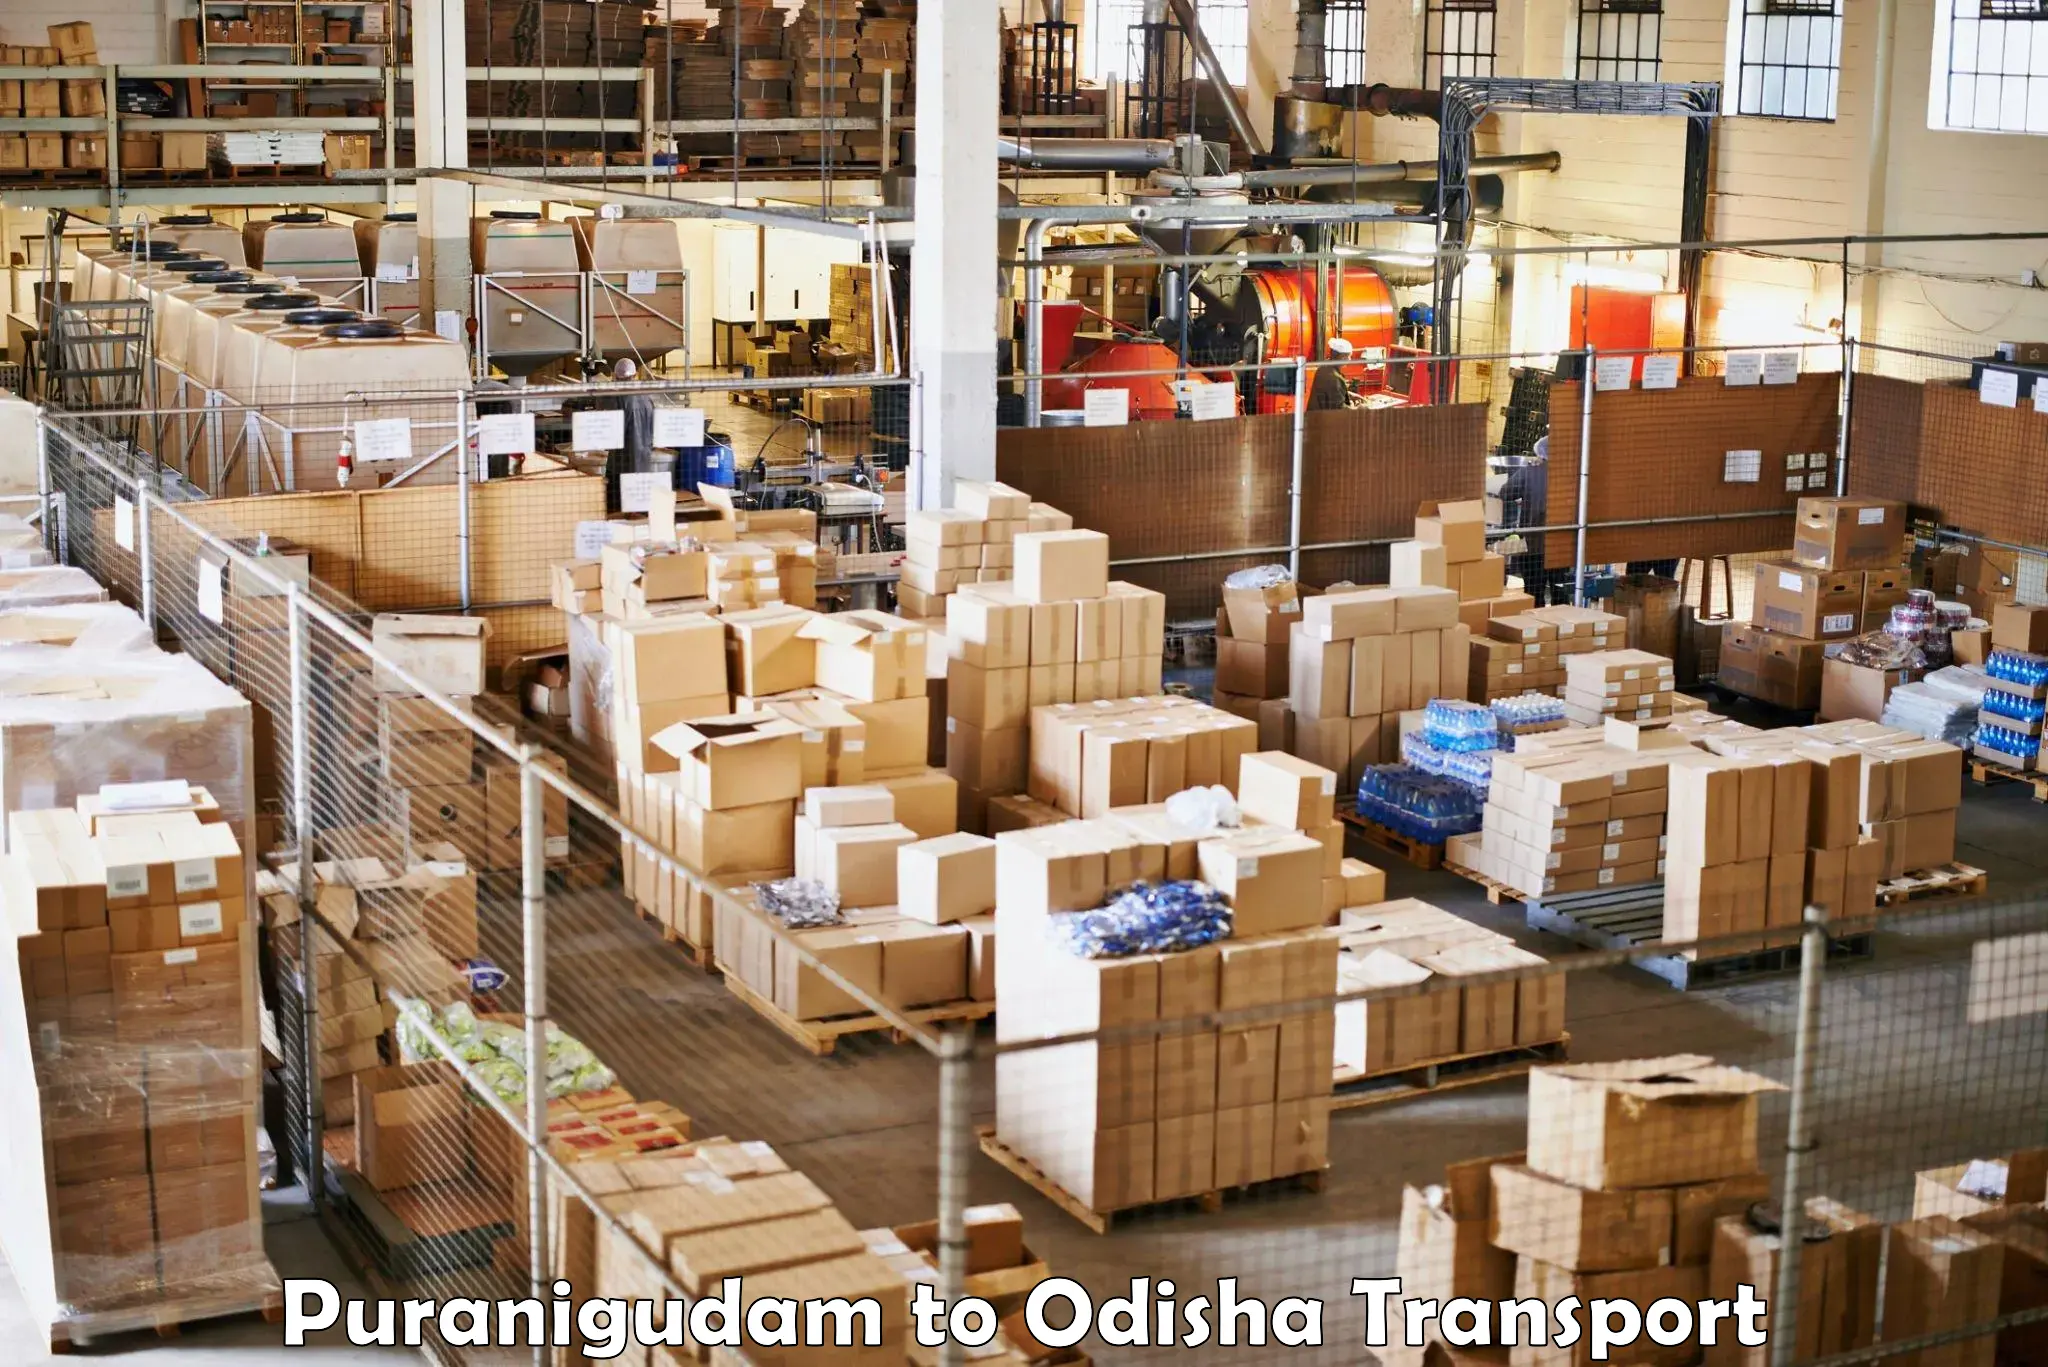 Truck transport companies in India Puranigudam to Dhamanagar